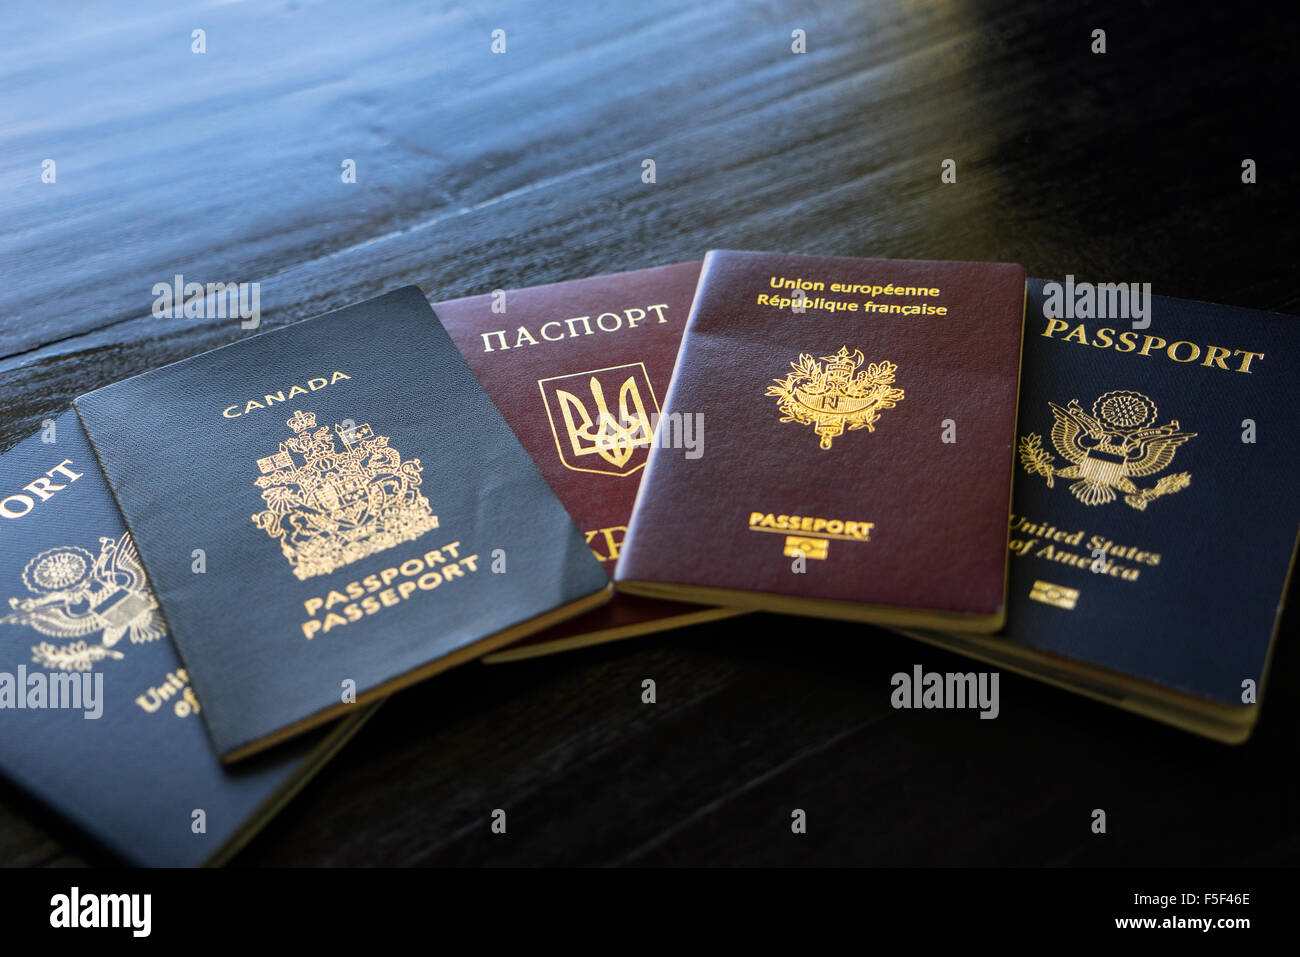 A set of international passports on a black wooden background Stock Photo